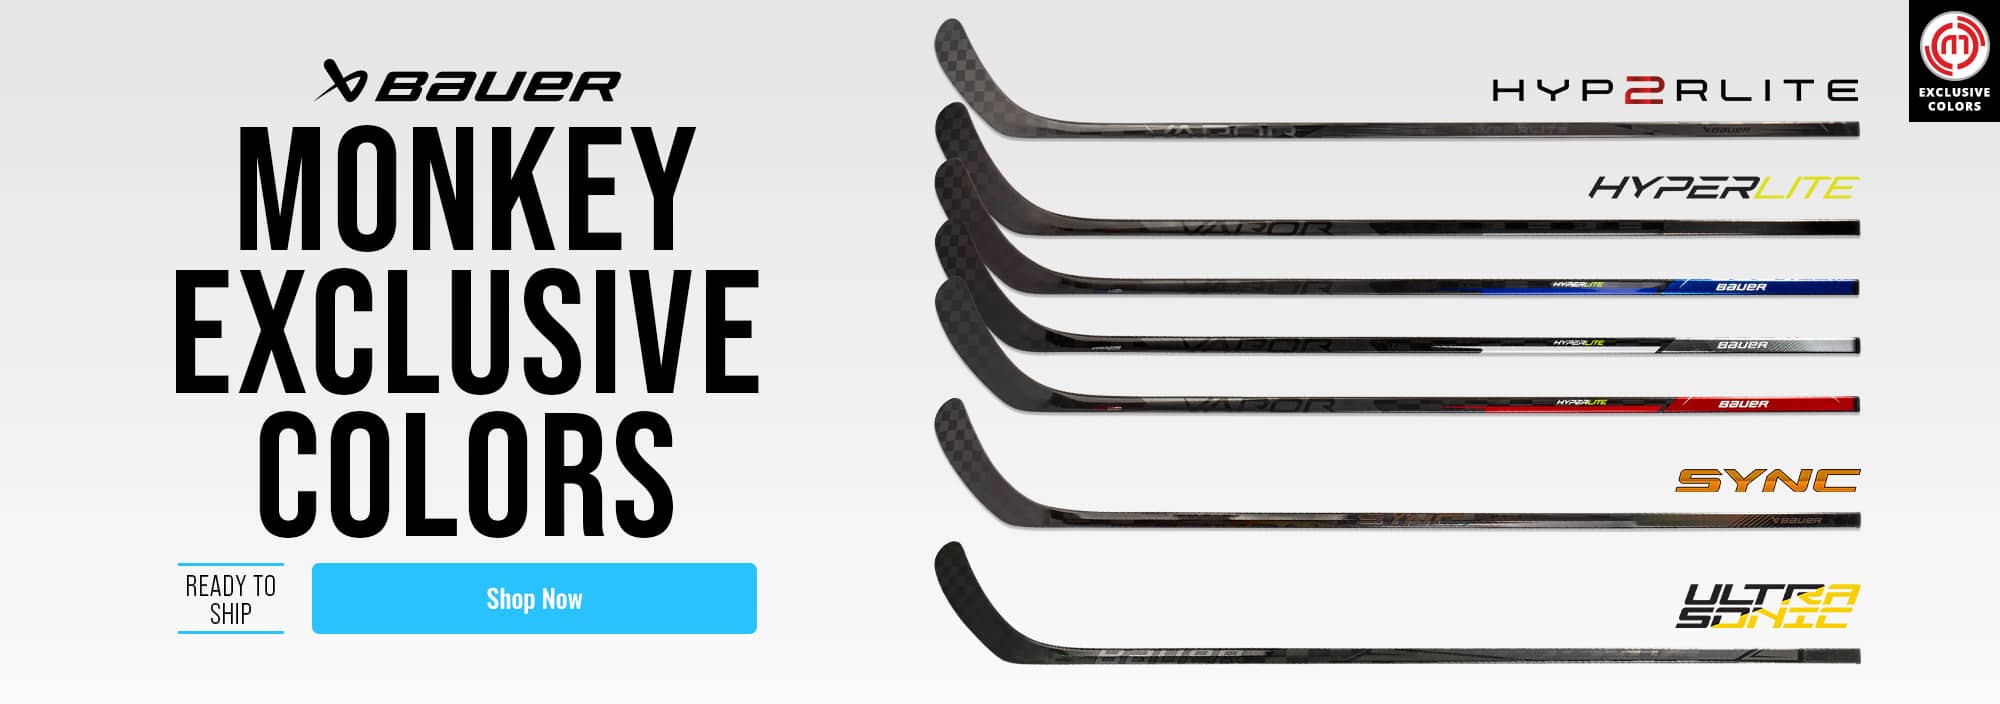 Hockey Equipment Best Online Store for Ice Hockey Gear